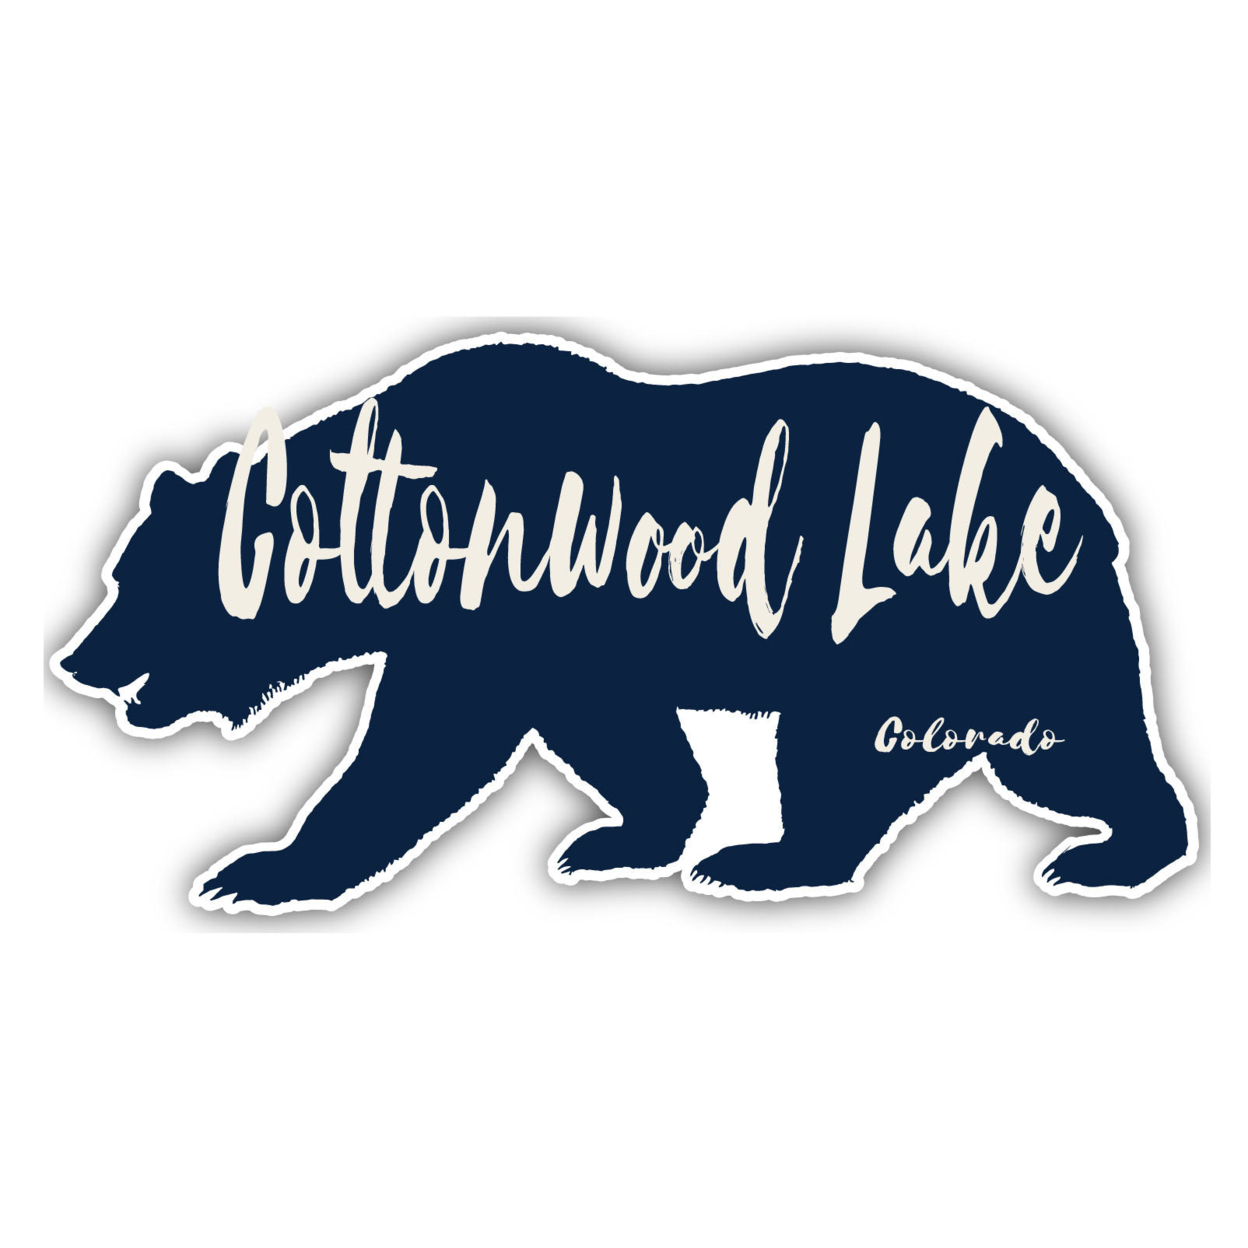 Cottonwood Lake Colorado Souvenir Decorative Stickers (Choose Theme And Size) - Single Unit, 4-Inch, Tent